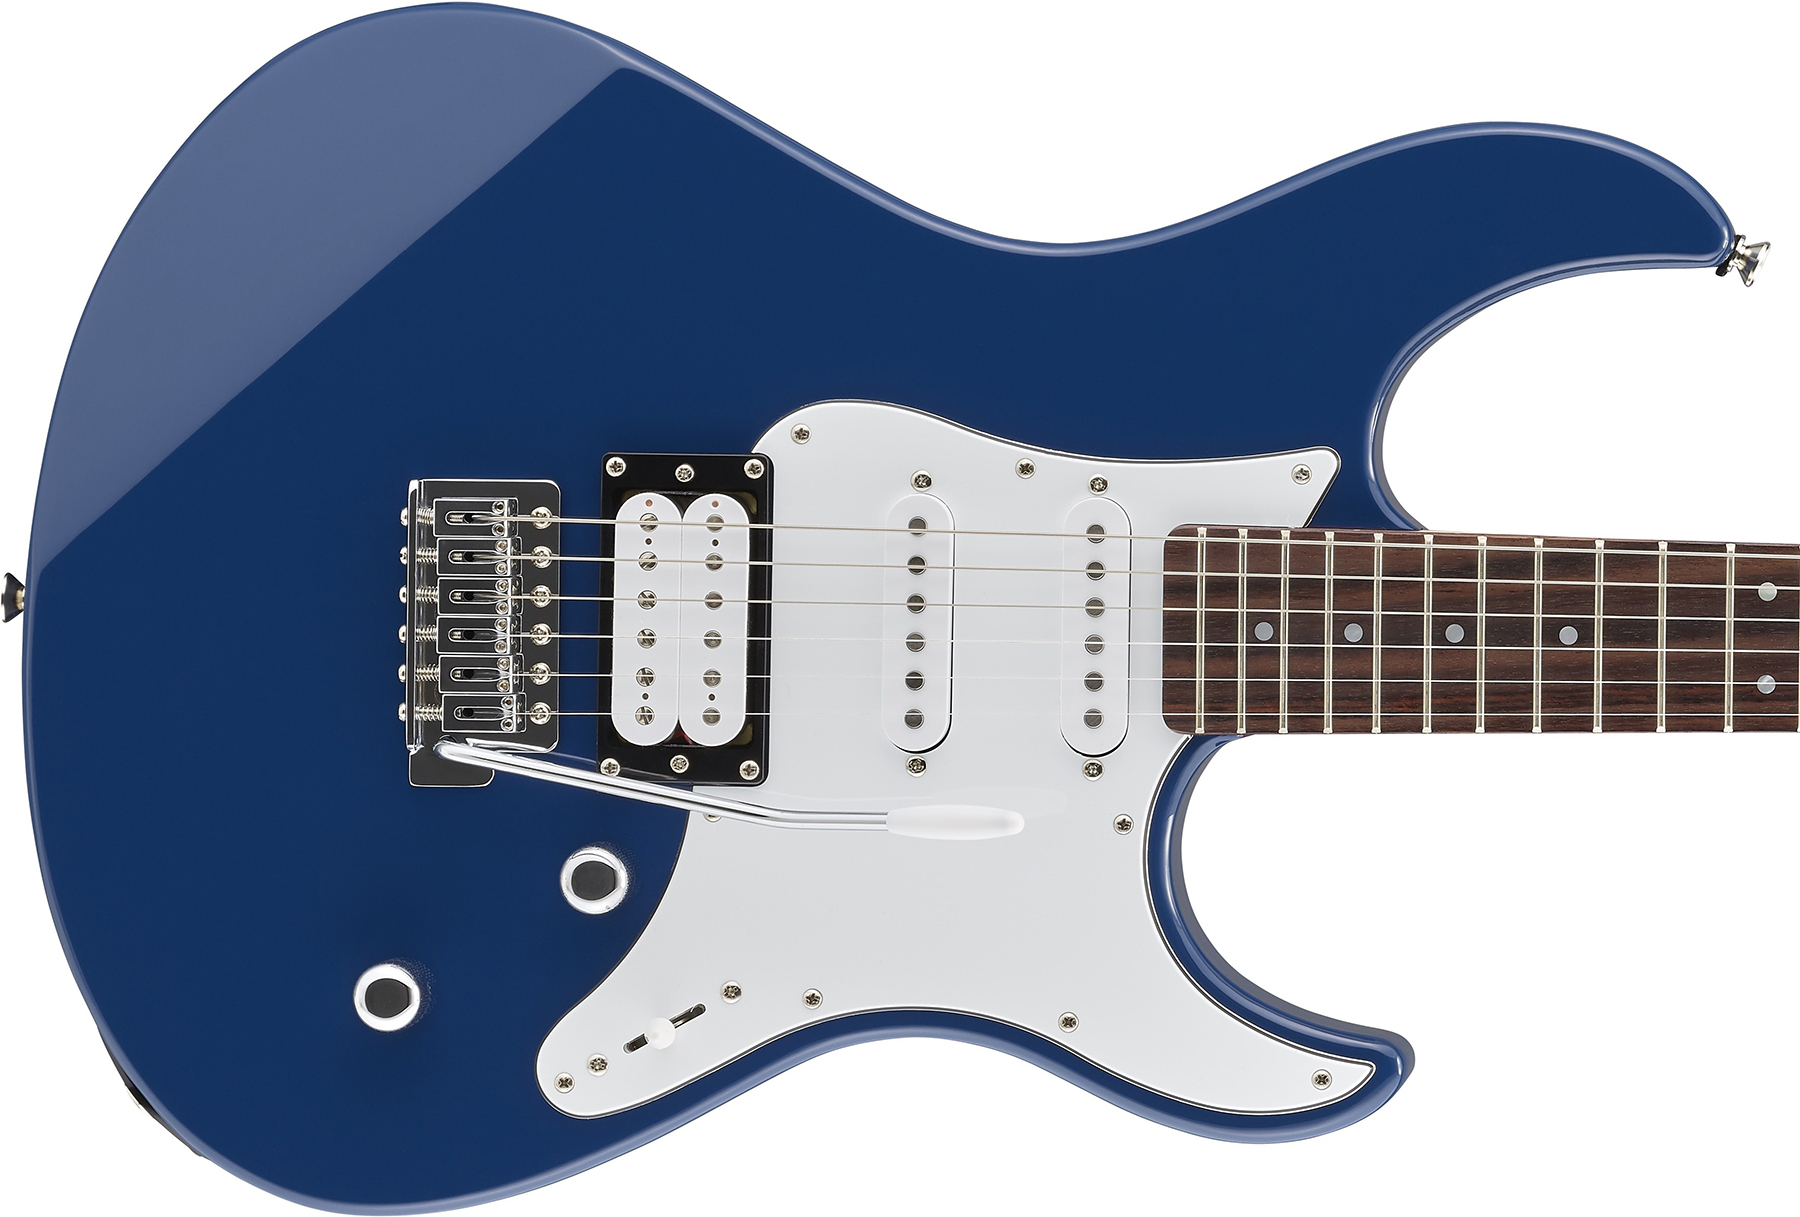 Yamaha Pacifica PAC112V - united blue blue Str shape electric guitar